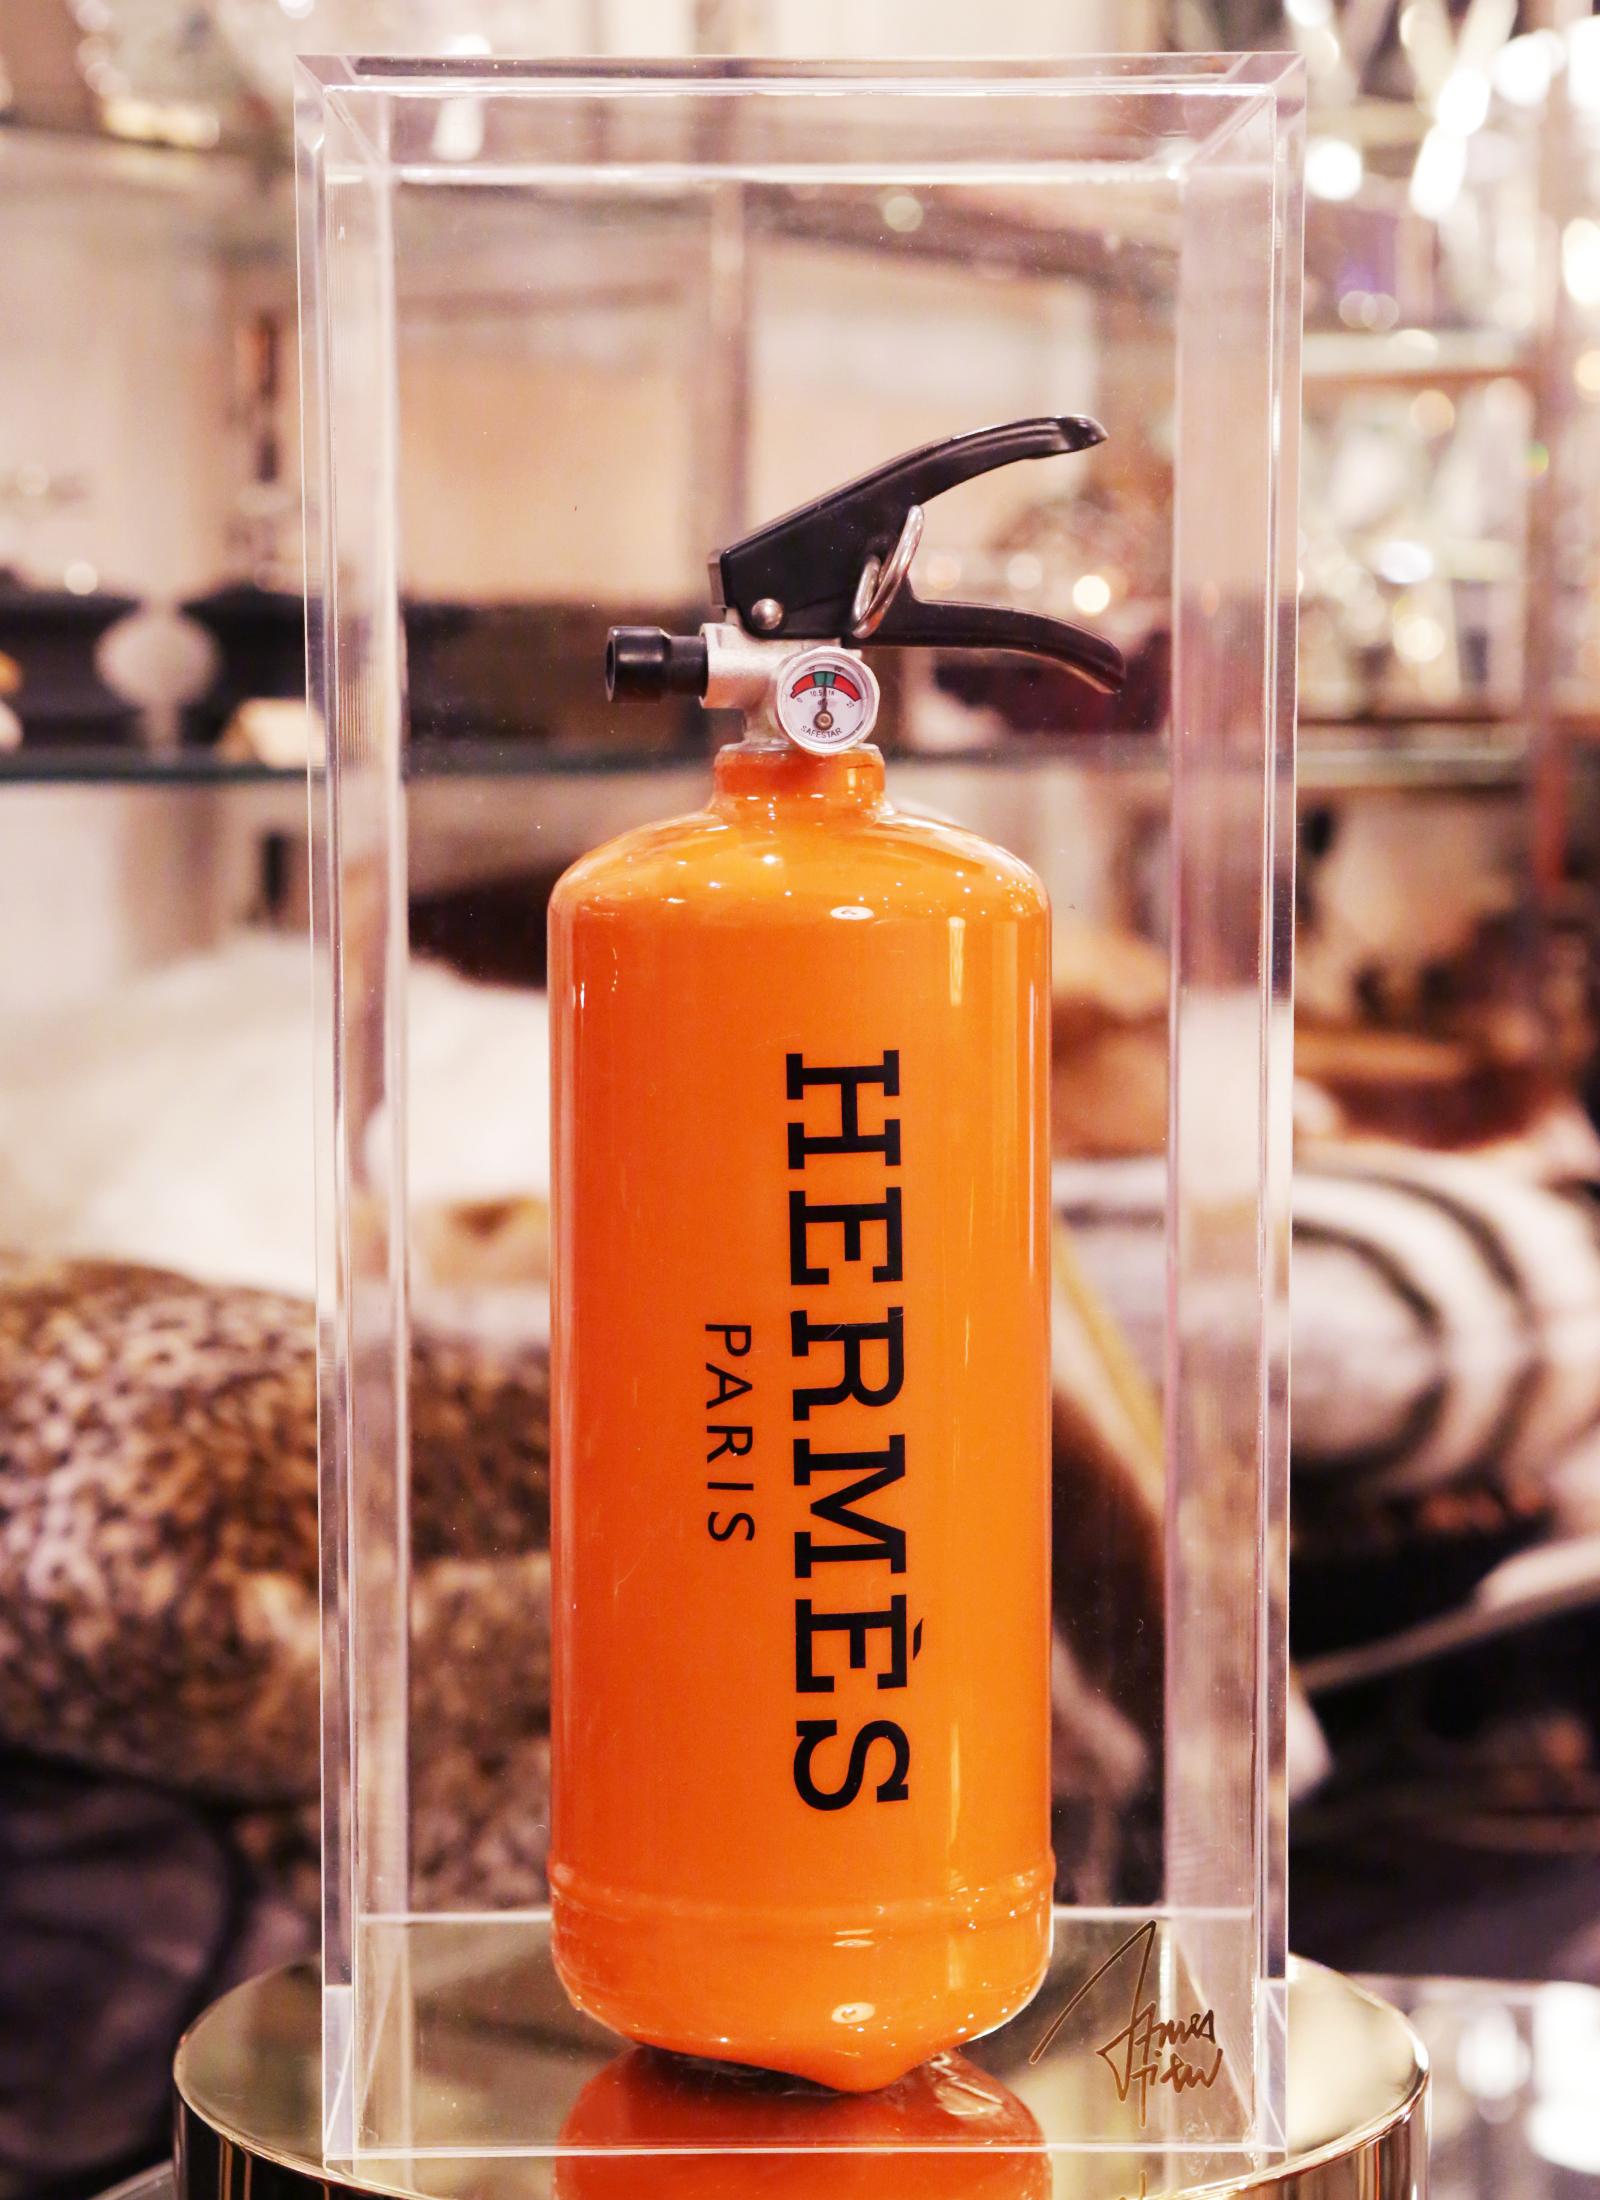 Extinguisher Hermes Paris. 
Limited edition of 25 pieces. Exceptional piece. 
Under plexiglass box.
Measures: box: L 20 x D 20 x H 42.5cm.
Extinguisher: L 10.5 x D 10.5 x H 35.5cm.